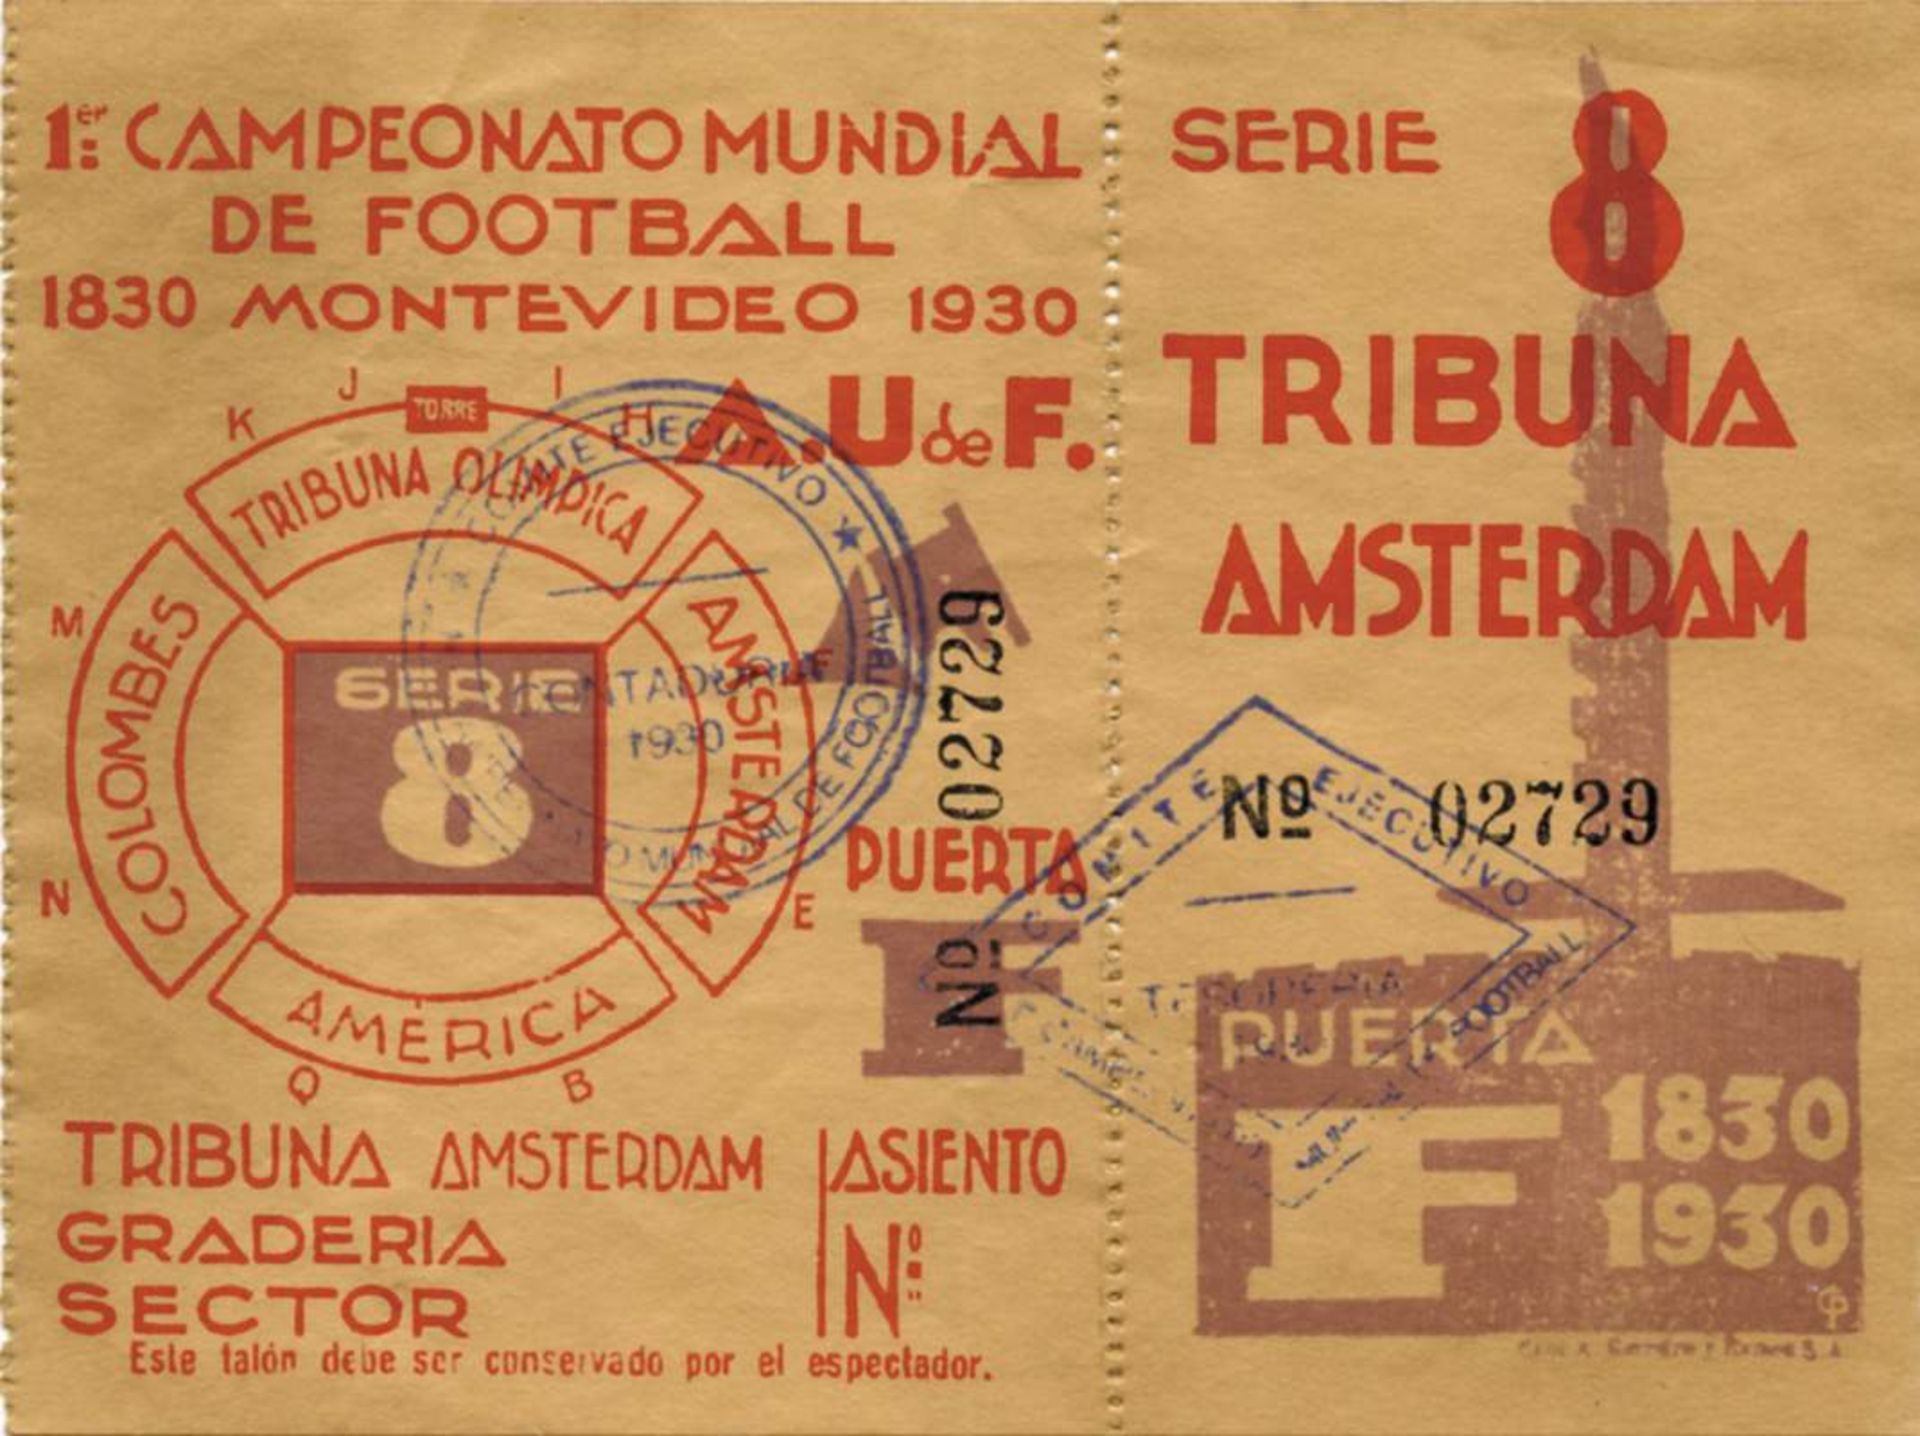 World Cup 1930. Original Final Ticket - "1er Campeonato Mundial Montevideo 1930 Serie 8" Argentina v